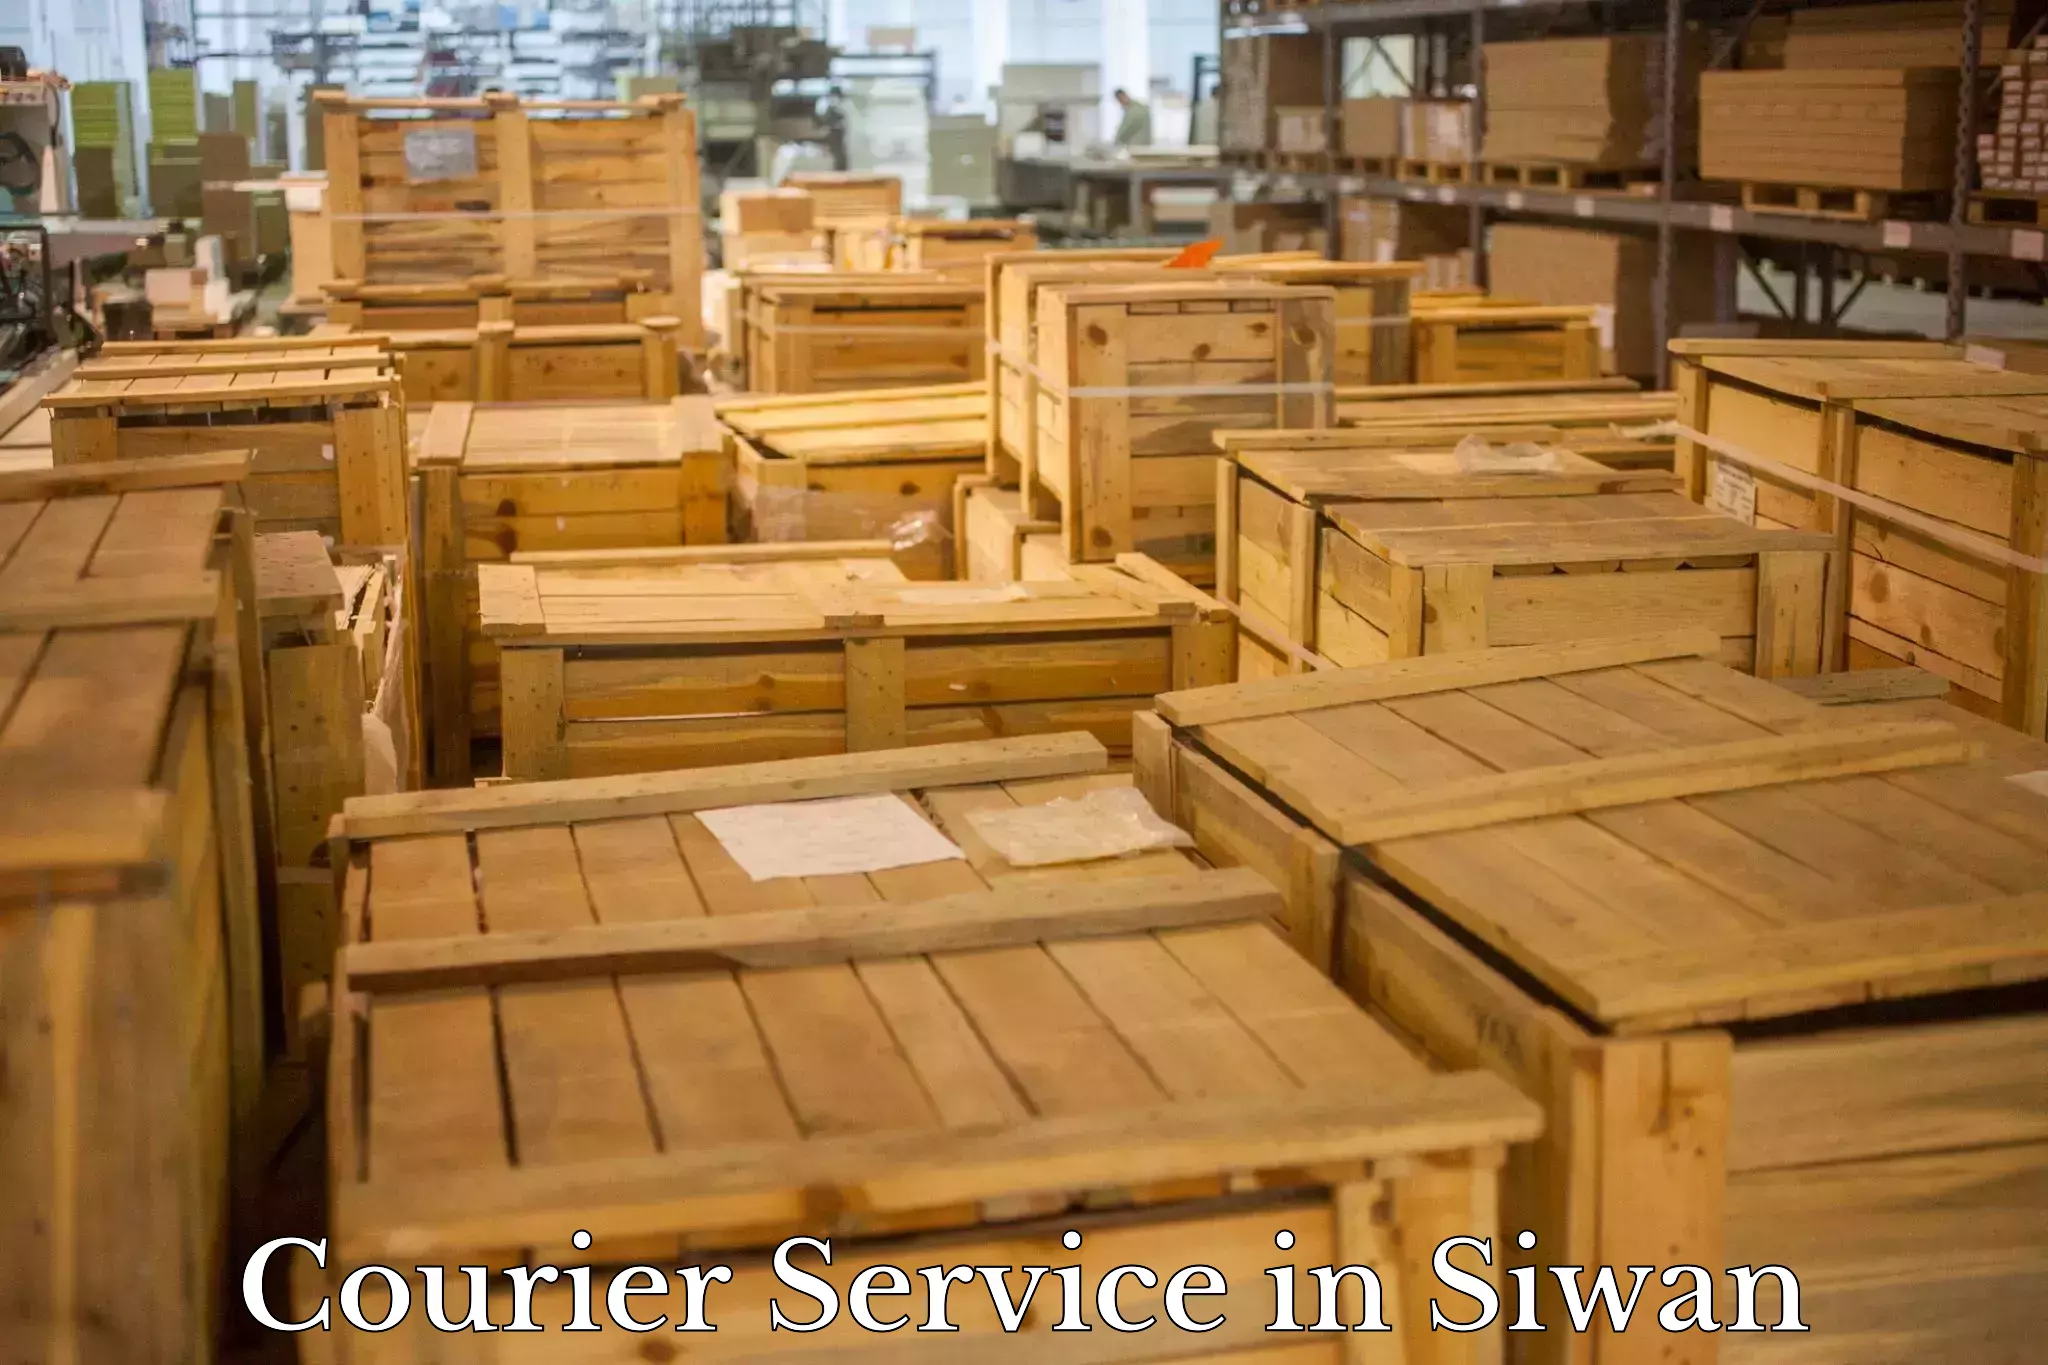 High-performance logistics in Siwan